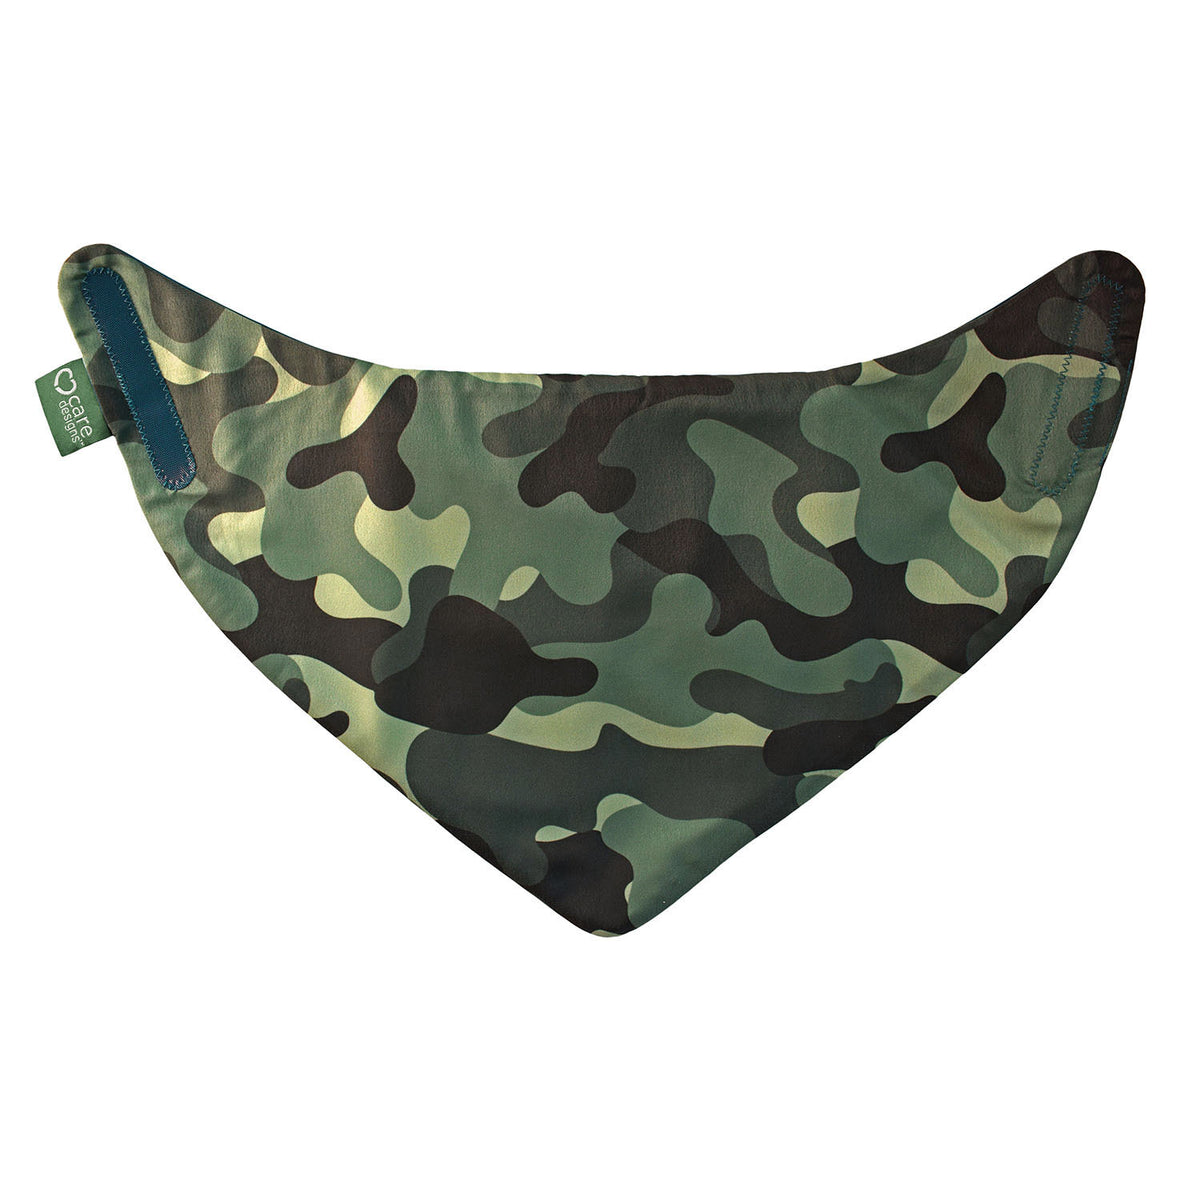 Junior Neckerchief style dribble bib - Khaki Camouflage